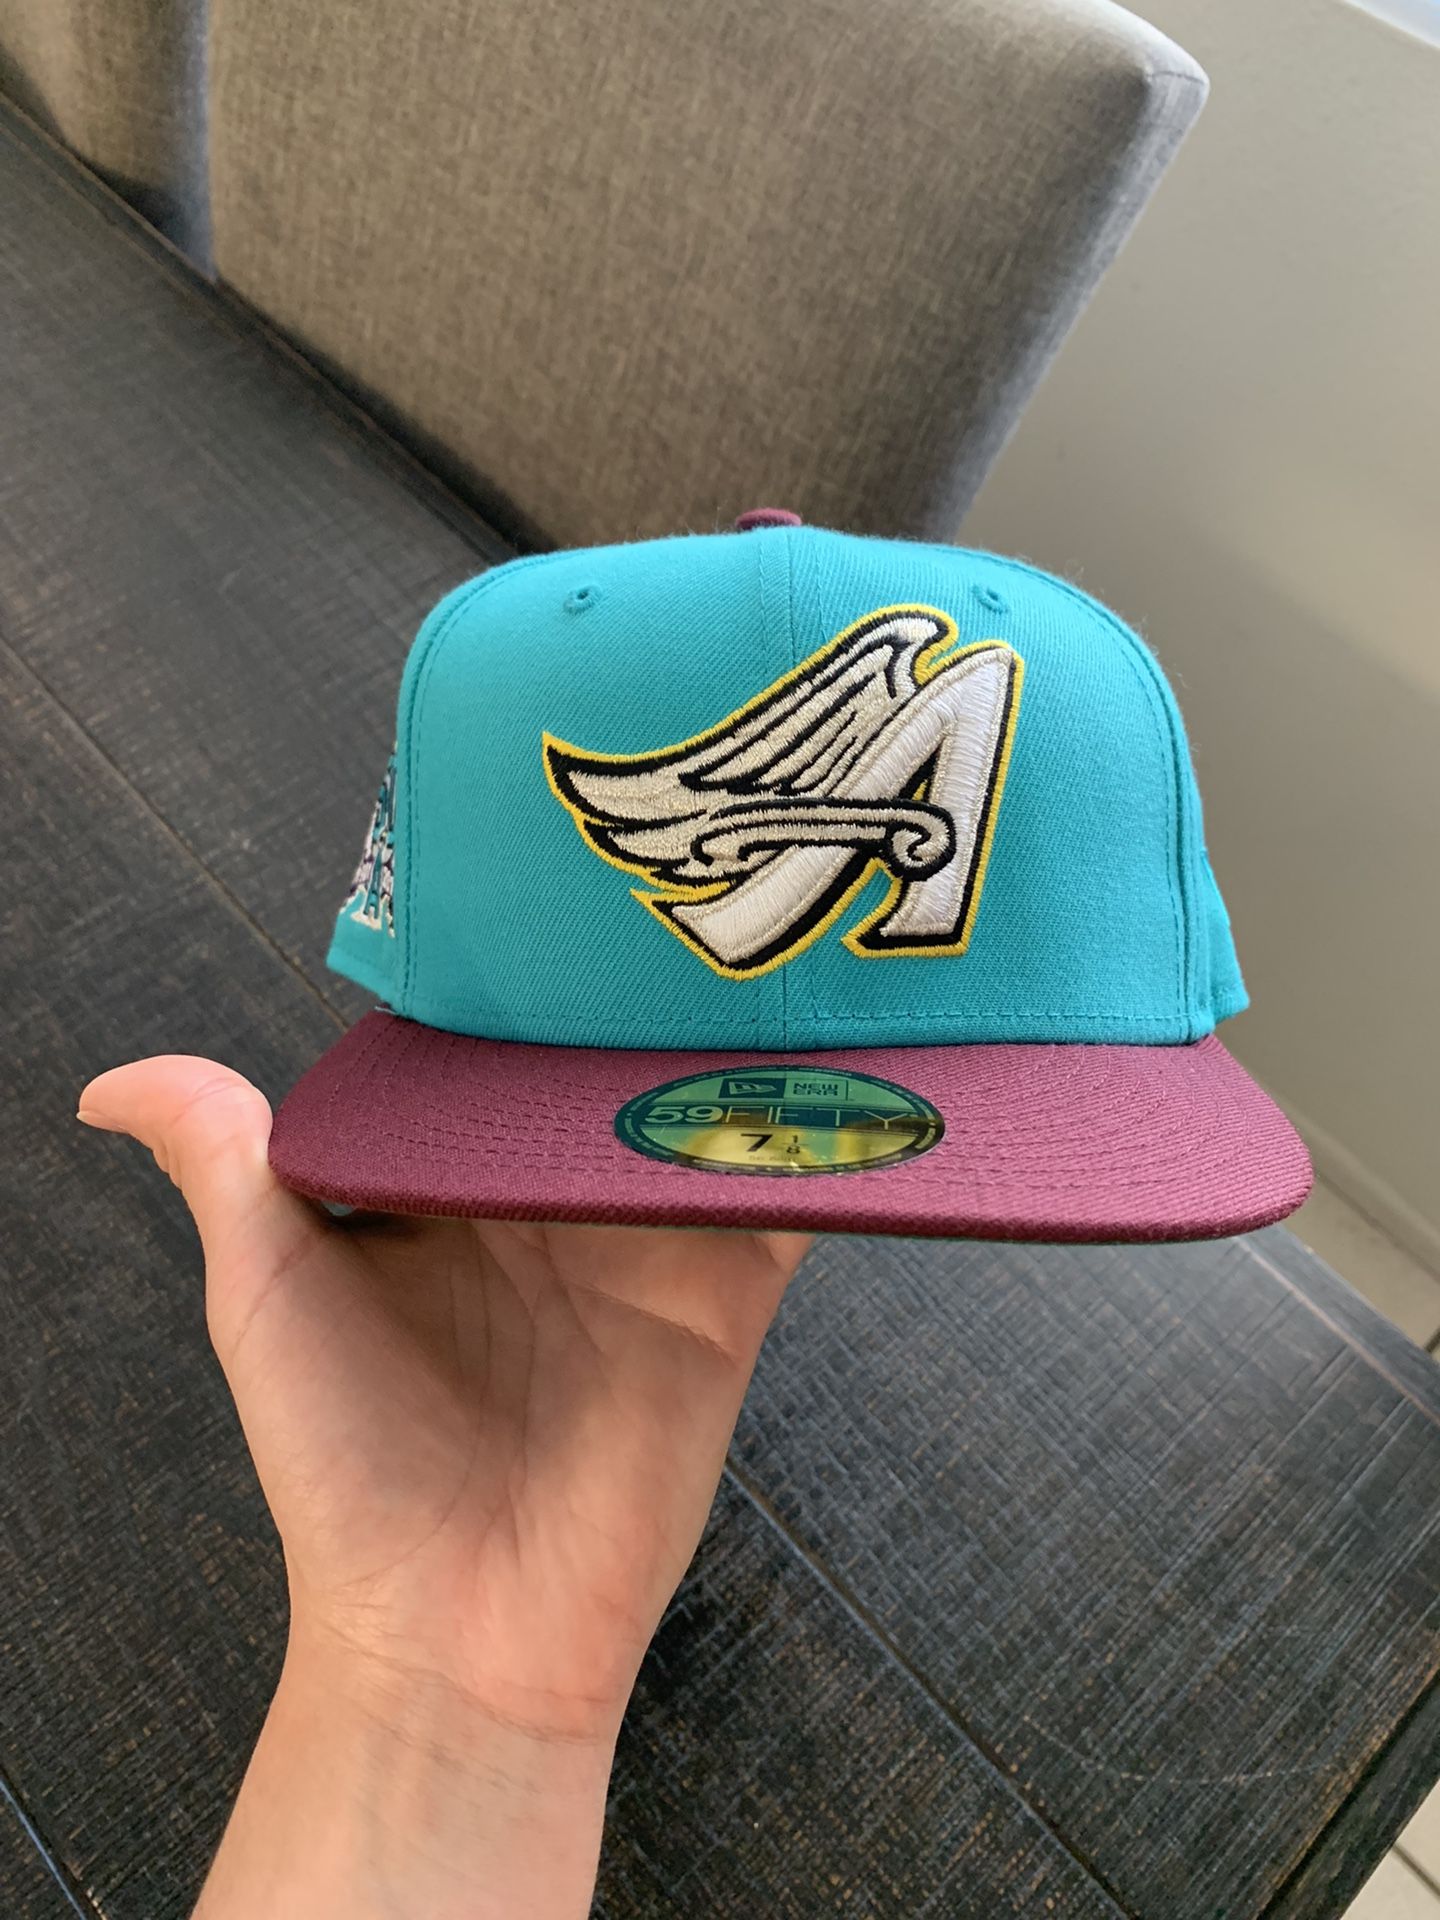 ANAHEIM MIGHTY DUCKS RARE VINTAGE NHL ADJUSTABLE SNAPBACK HAT CAP EXCELLENT  for Sale in Anaheim, CA - OfferUp